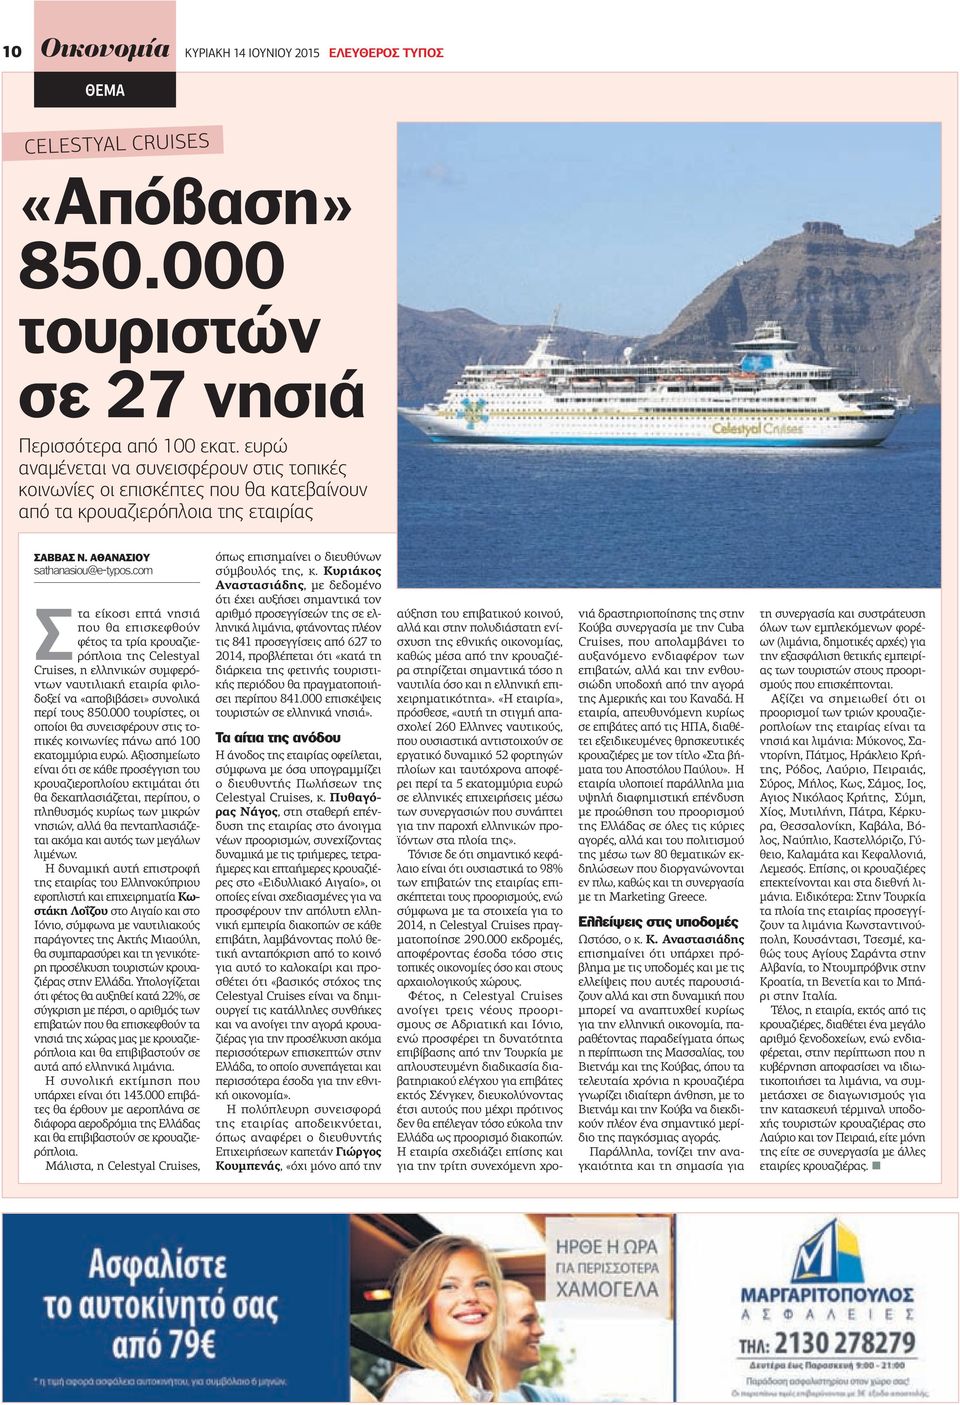 com Στα είκοσι επτά νησιά που θα επισκεφθούν φέτος τα τρία κρουαζιερόπλοια της Celestyal Cruises, η ελληνικών συμφερόντων ναυτιλιακή εταιρία φιλοδοξεί να «αποβιβάσει» συνολικά περί τους 850.